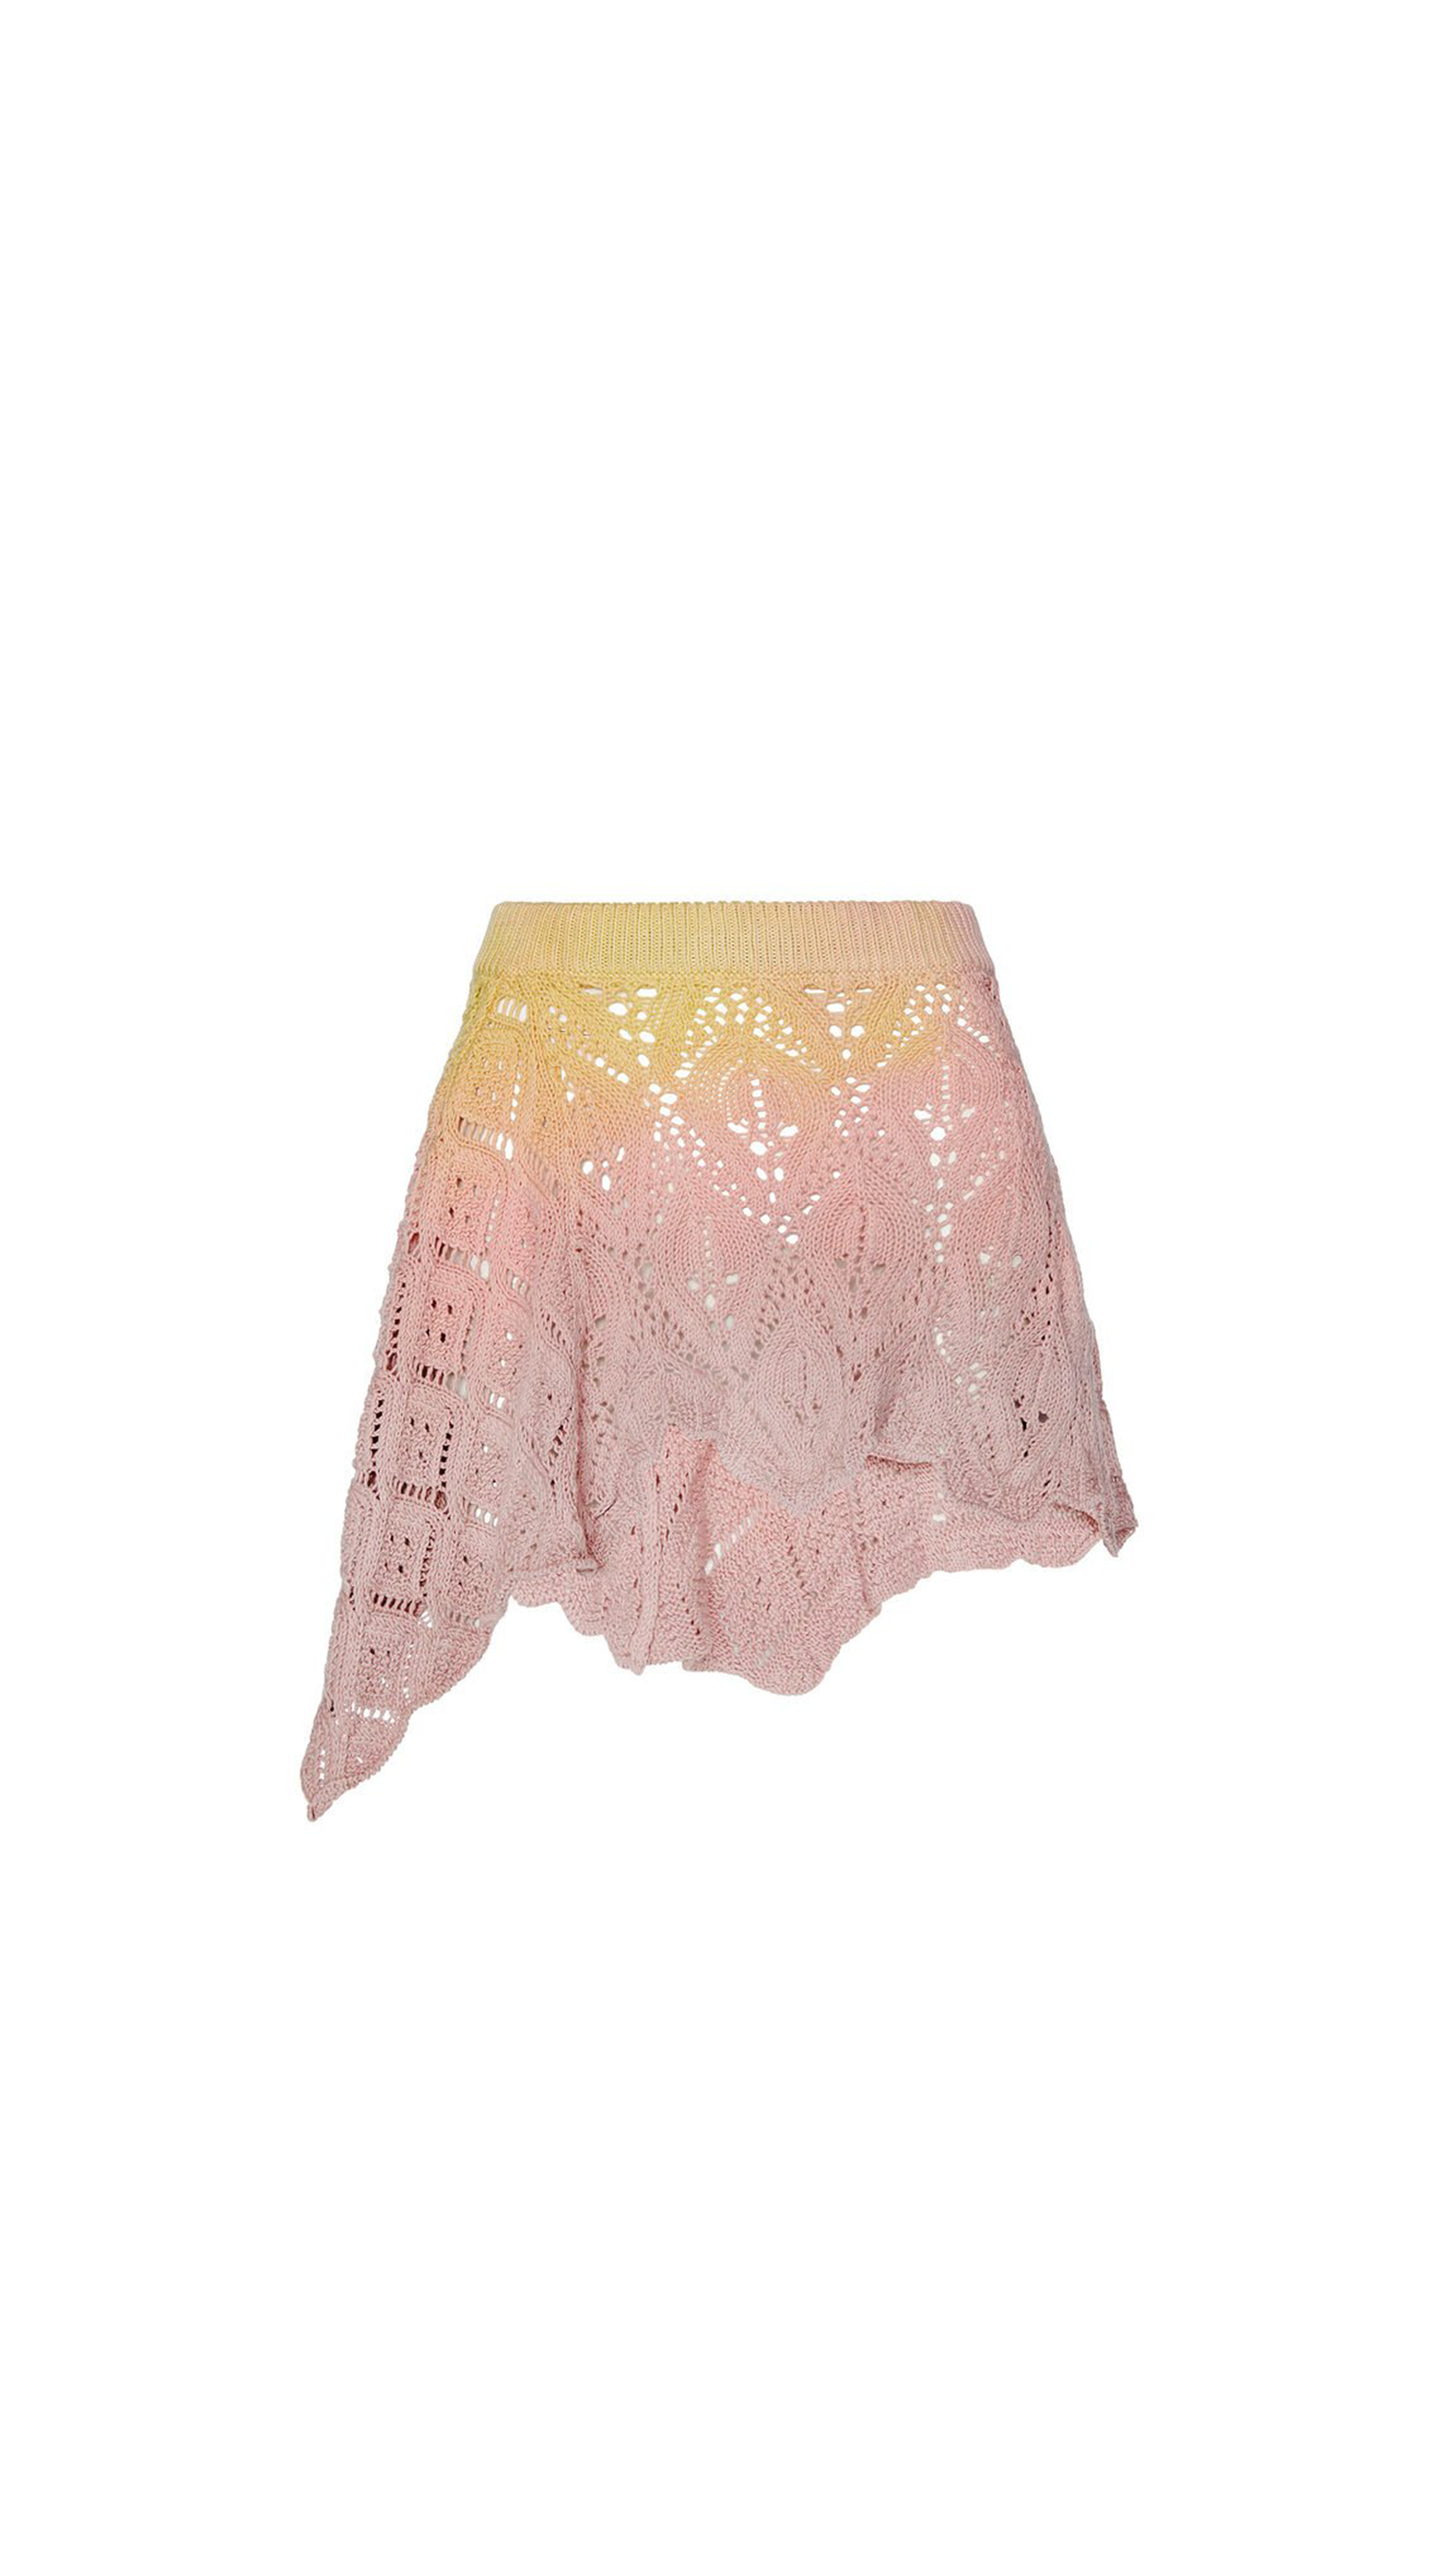 Asymmetric Mini Skirt in Tie-dye Cotton Crochet - Pink & Yellow